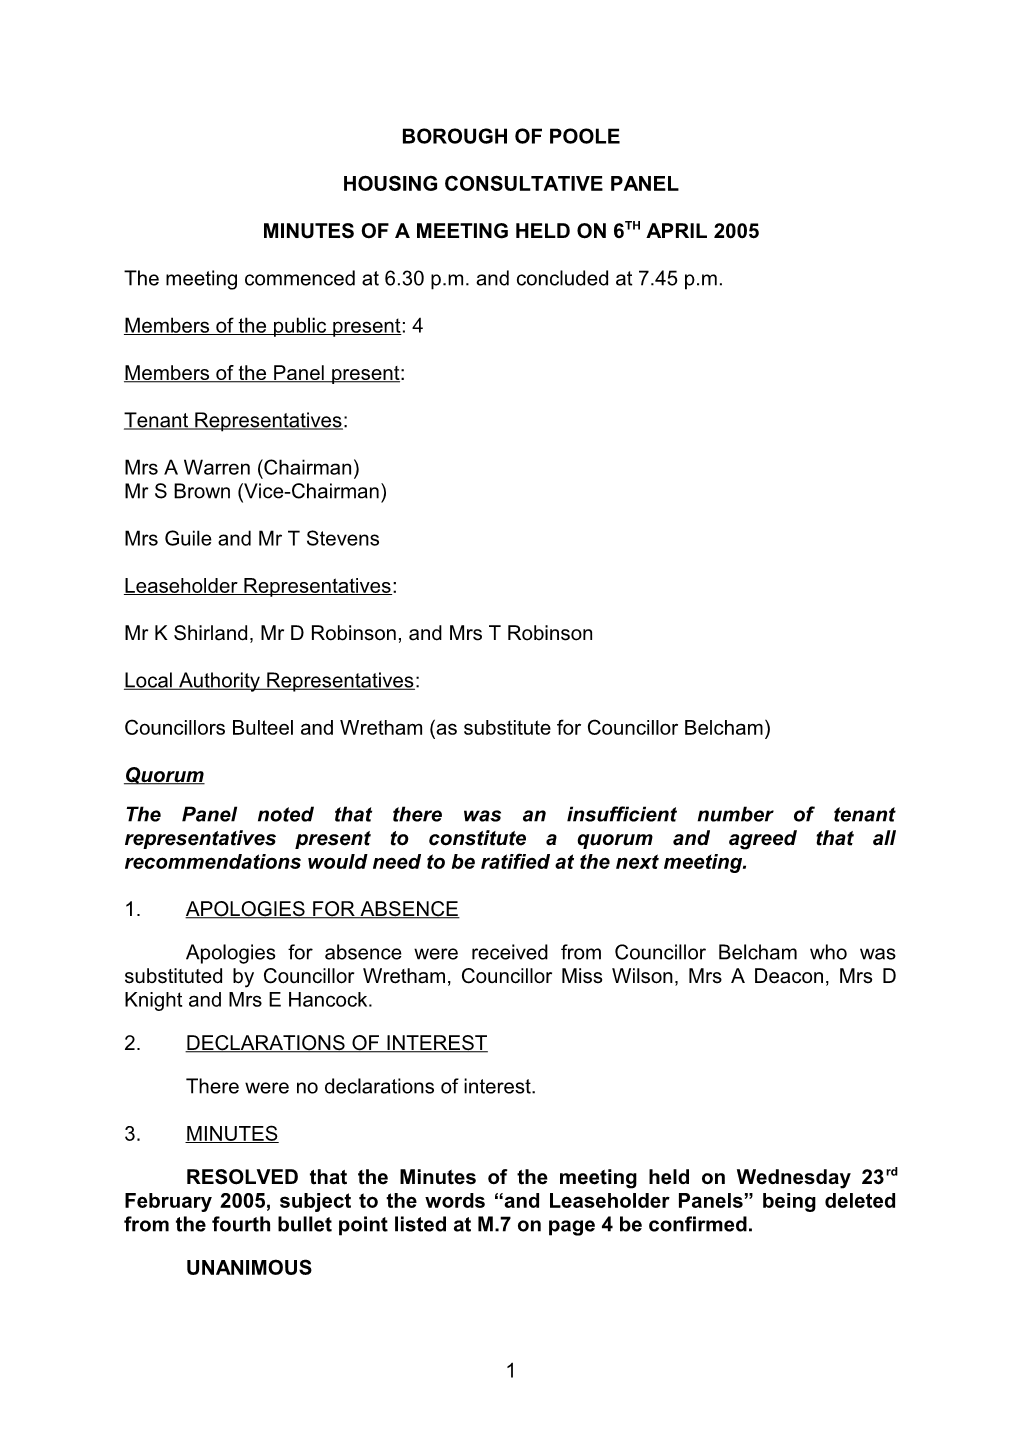 Minutes - Housing Consultative Panel - 6Th April 2005